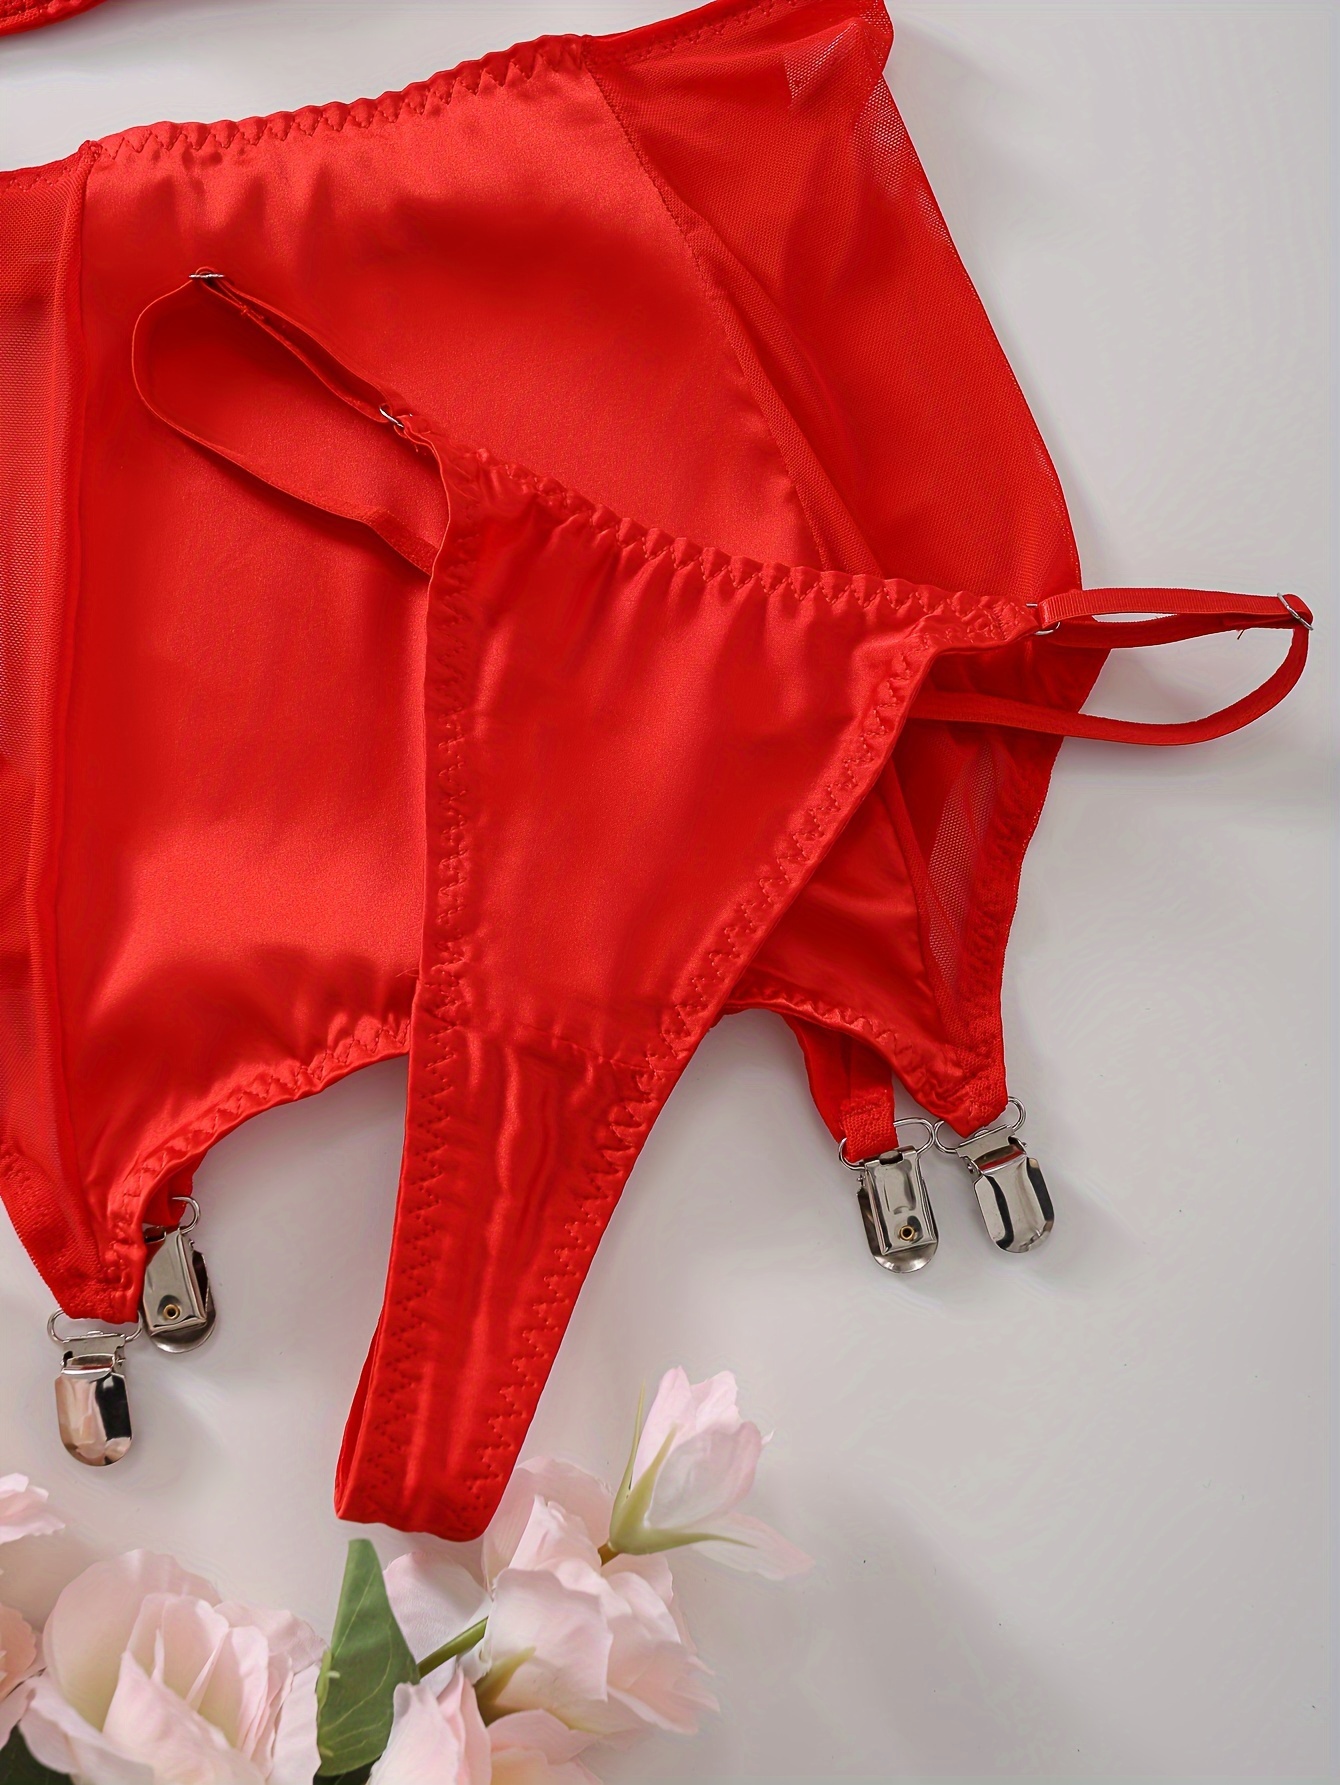 Solid Satin Lingerie Set Cut Intimates Bra Garter Belt Thong